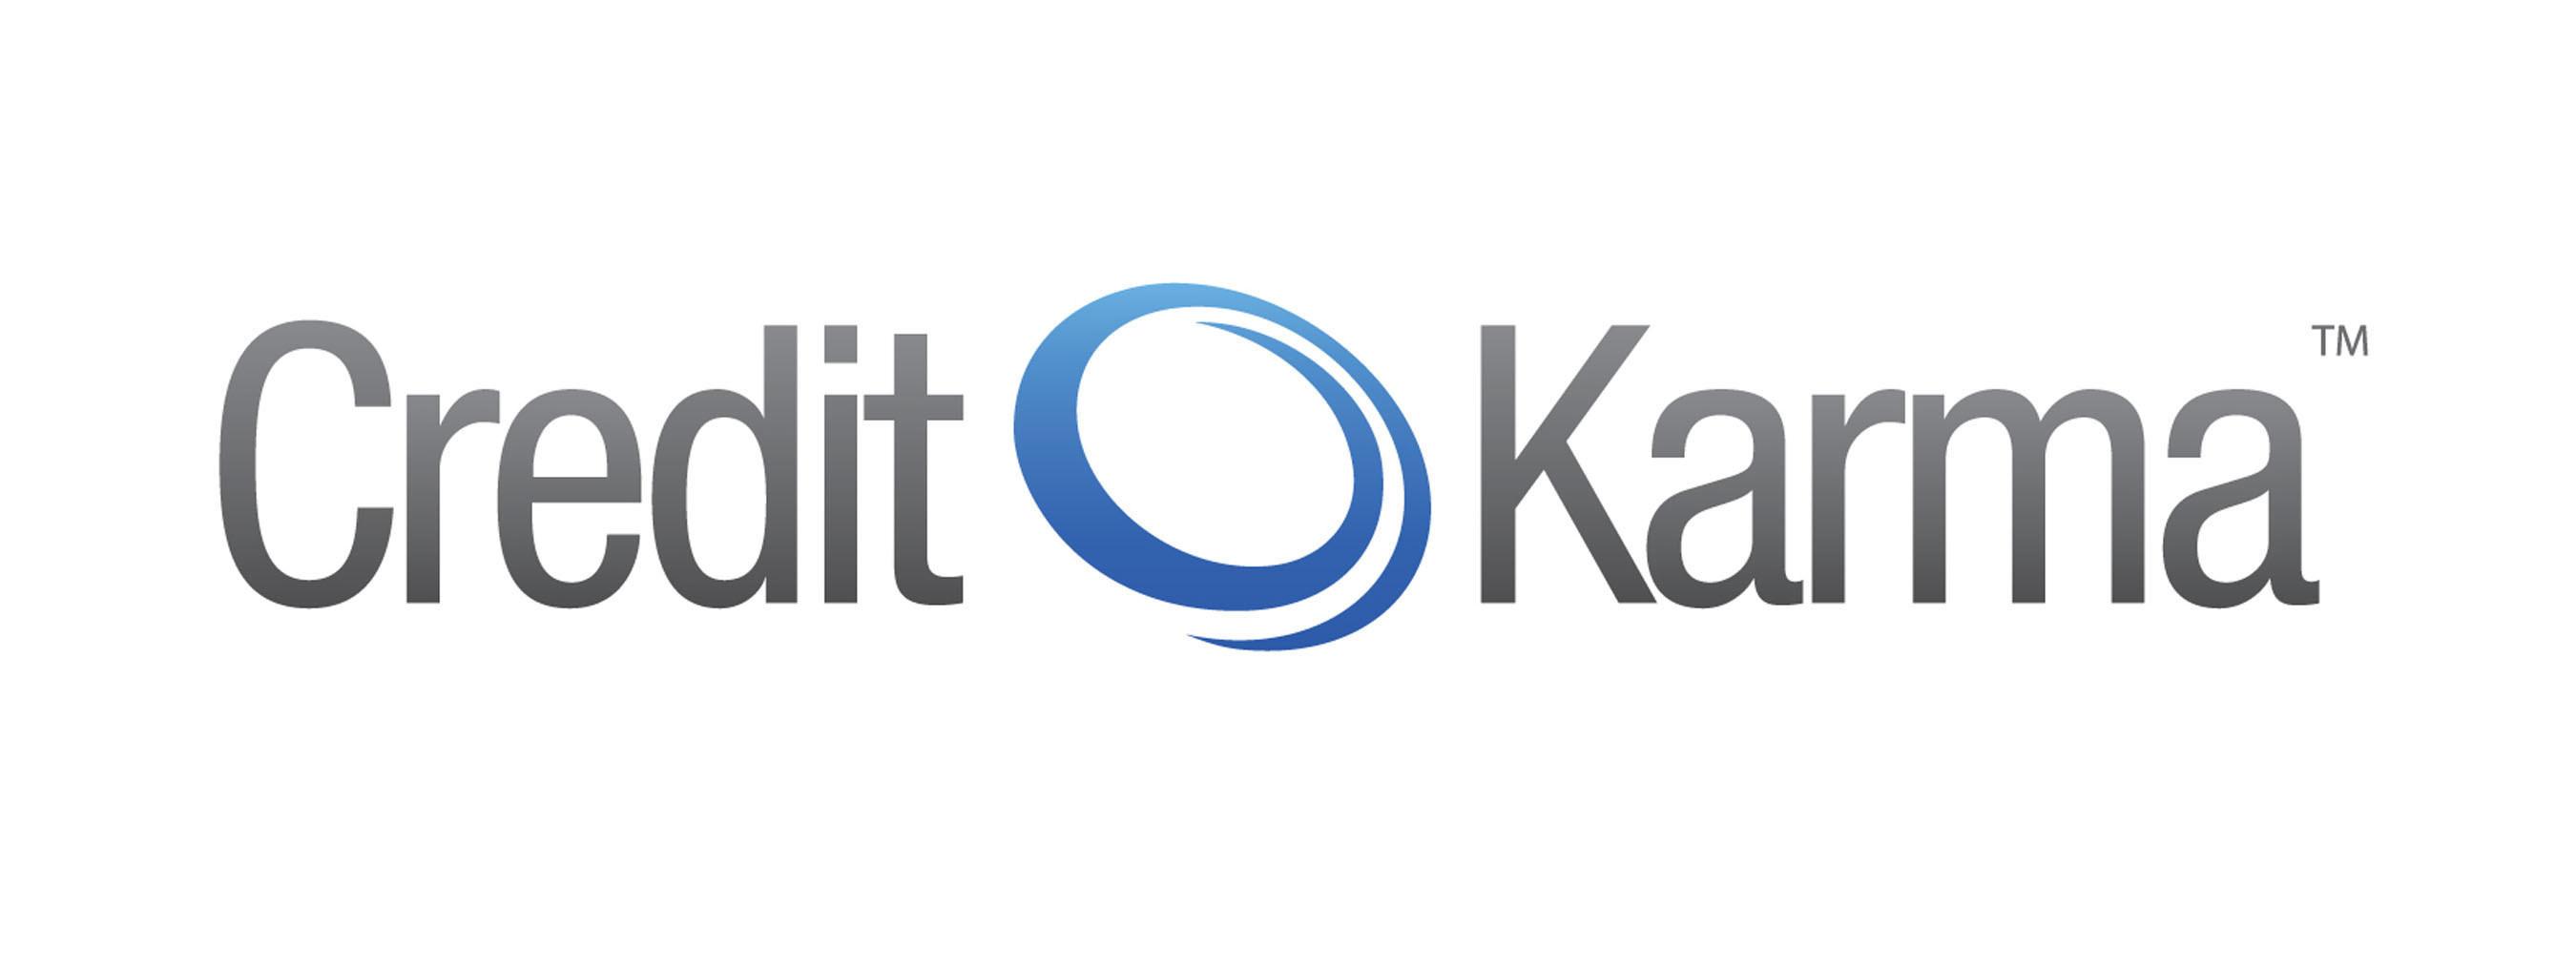 Credit Karma Logo - Credit Karma logo